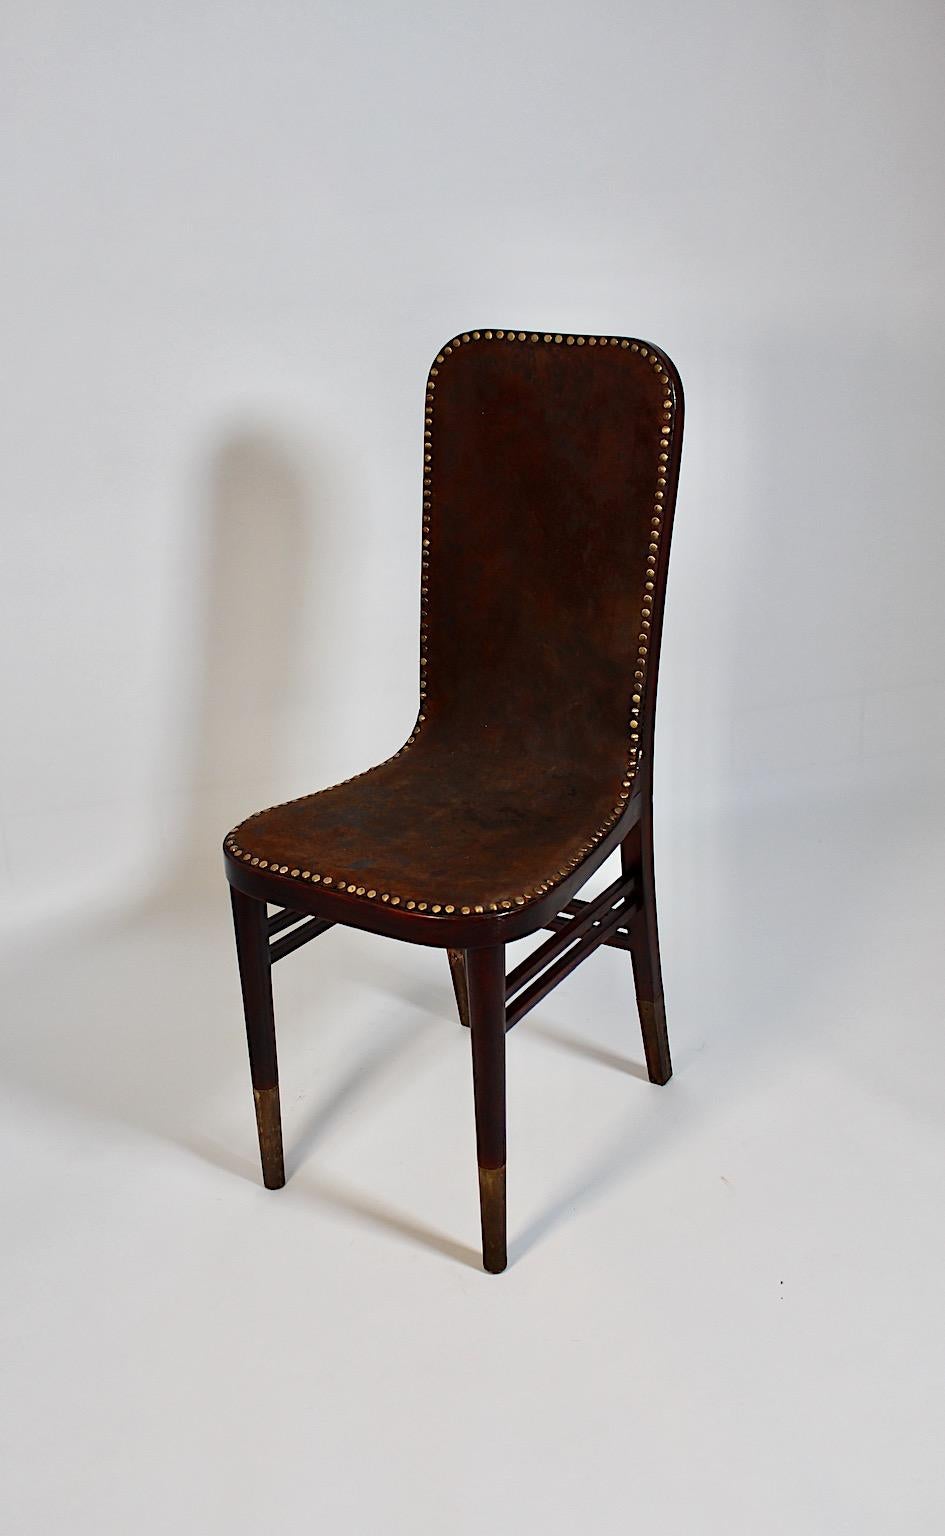 Jugendstil Side Chair Beech Leather by Joseph Urban Gebrüder Thonet 1903 Vienna For Sale 3